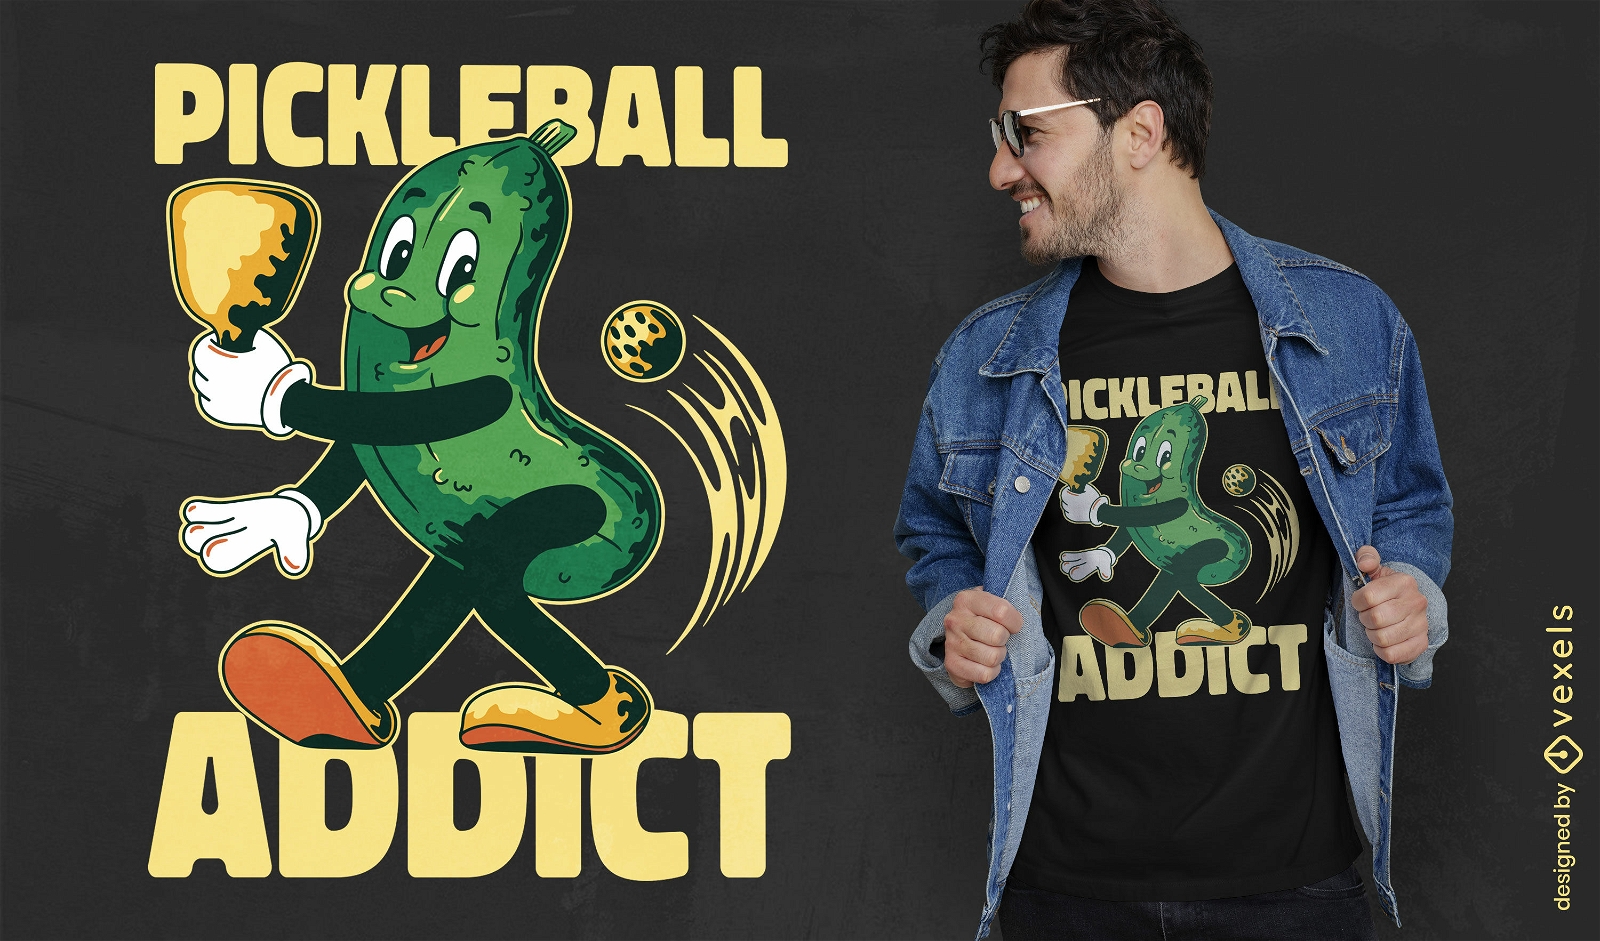 Pickleball-S?chtiger-T-Shirt-Design